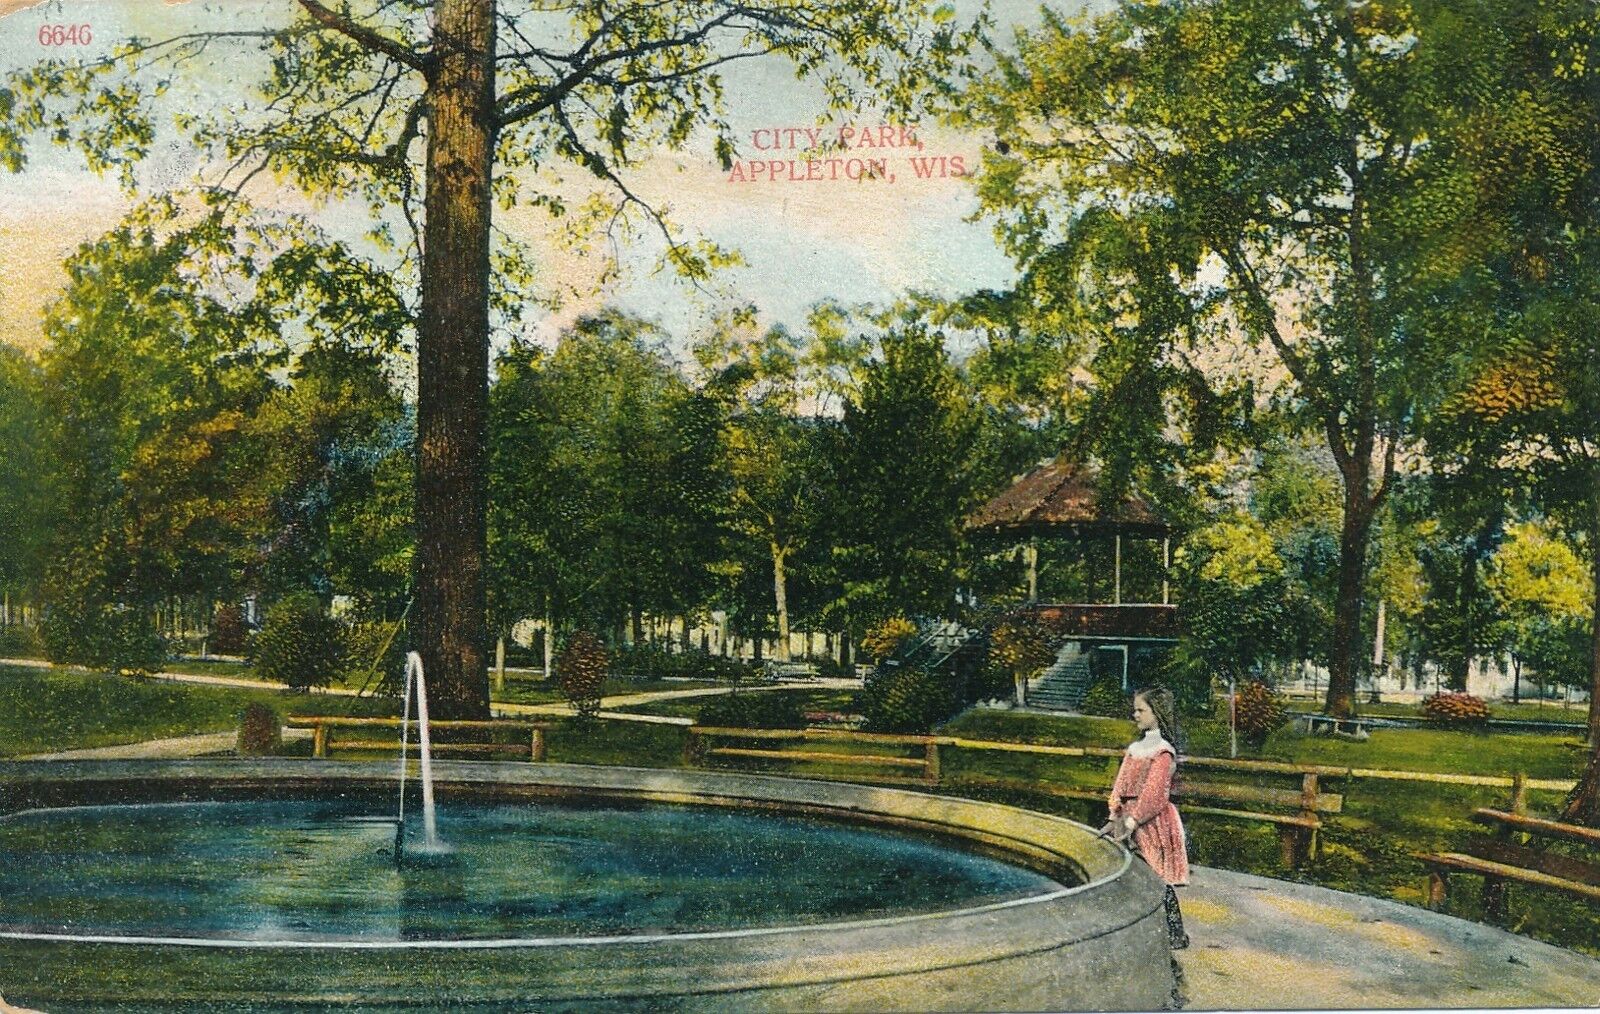 APPLETON WI – City Park - 1910